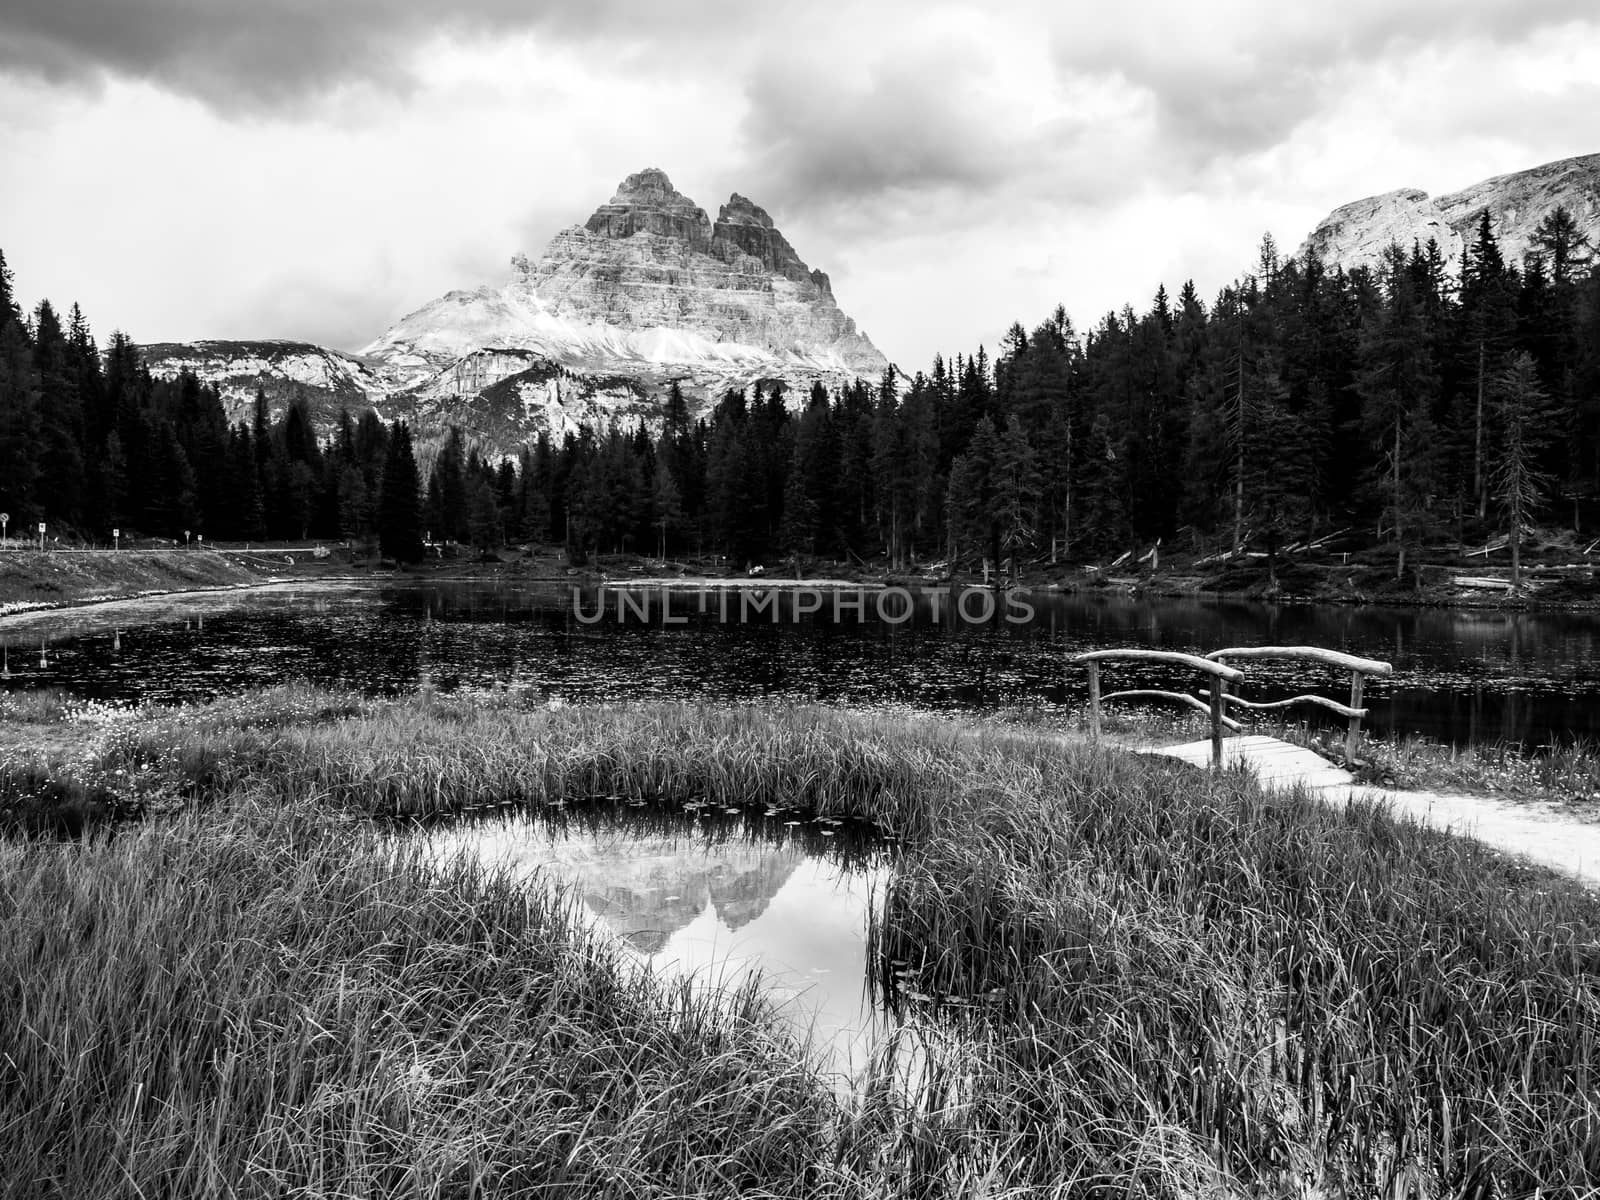 Tre Cime di Lavaredo Mountain reflected in water od Antorno Lake, Dolomites, Italy. Black and white image.